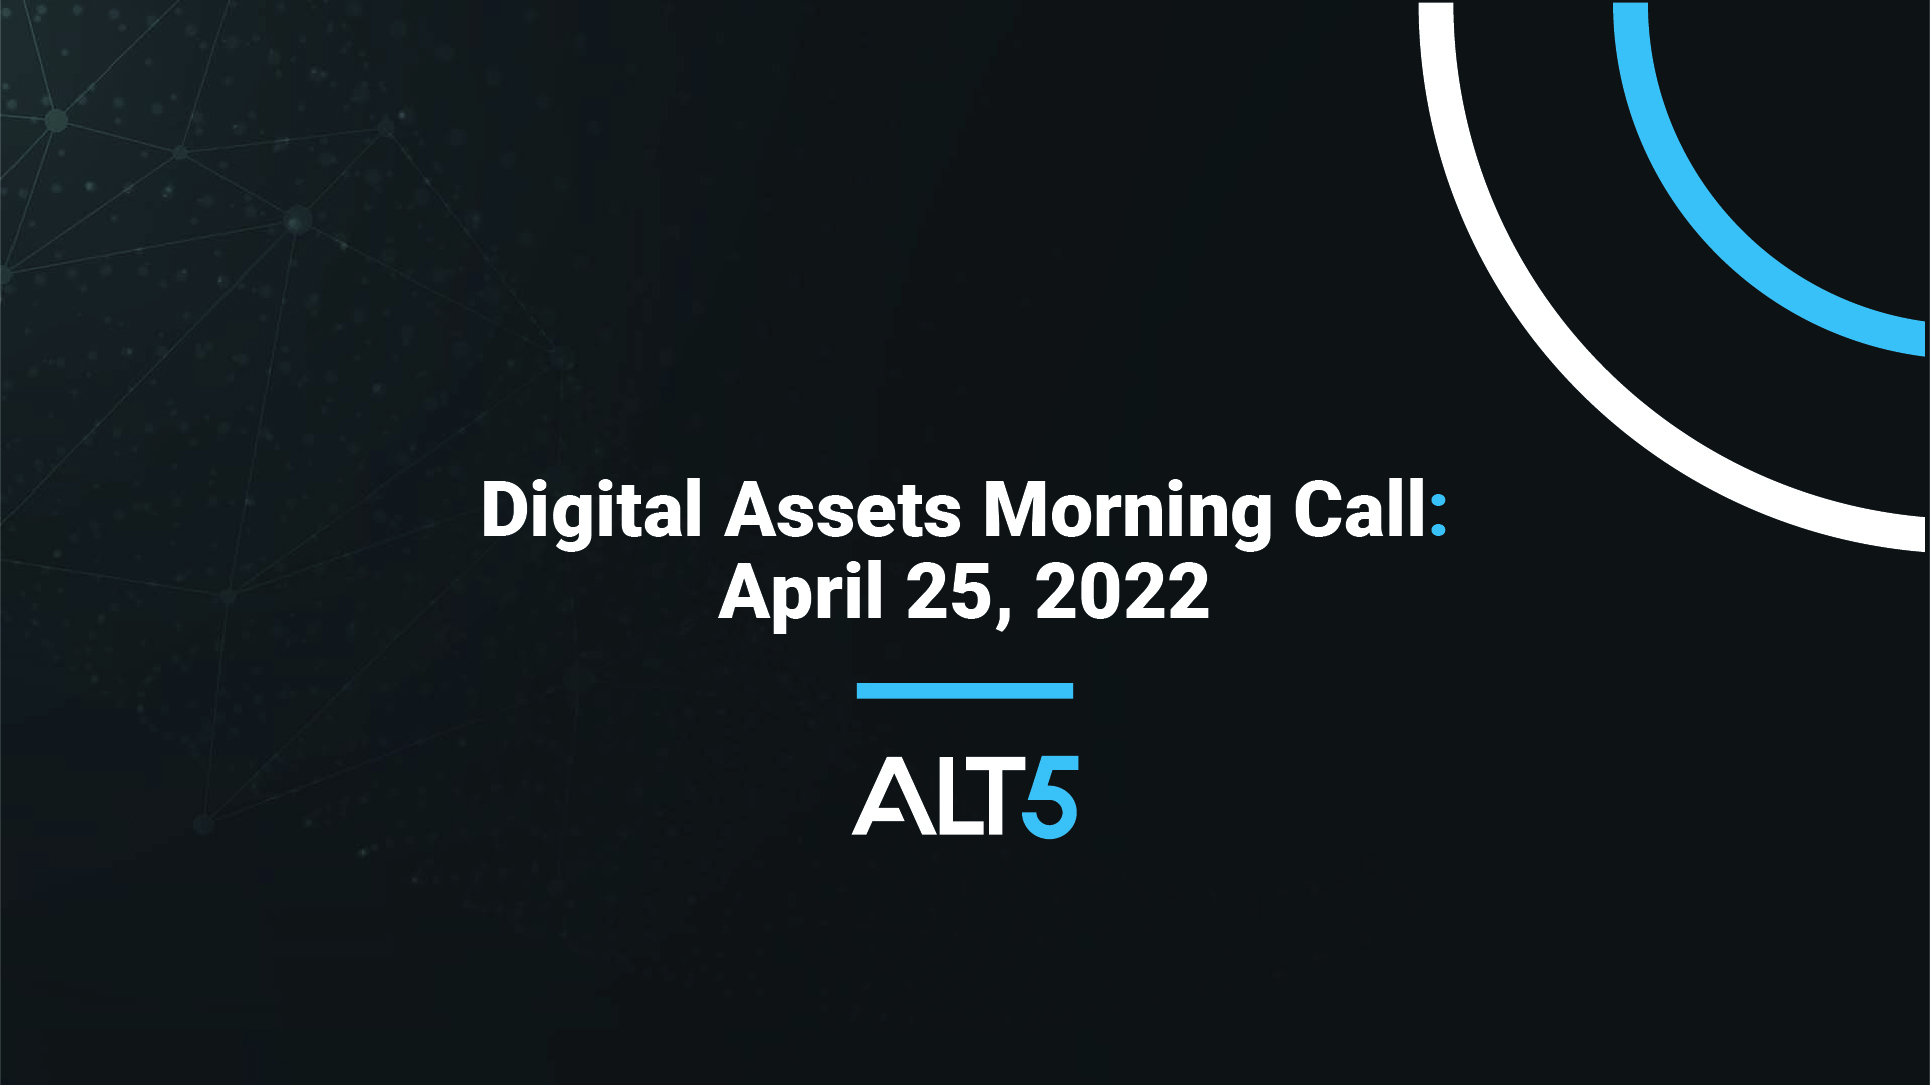 Digital Assets Morning Call: April 25 2022 - Major crypto assets extend recent declines alongside weakness in risk assets